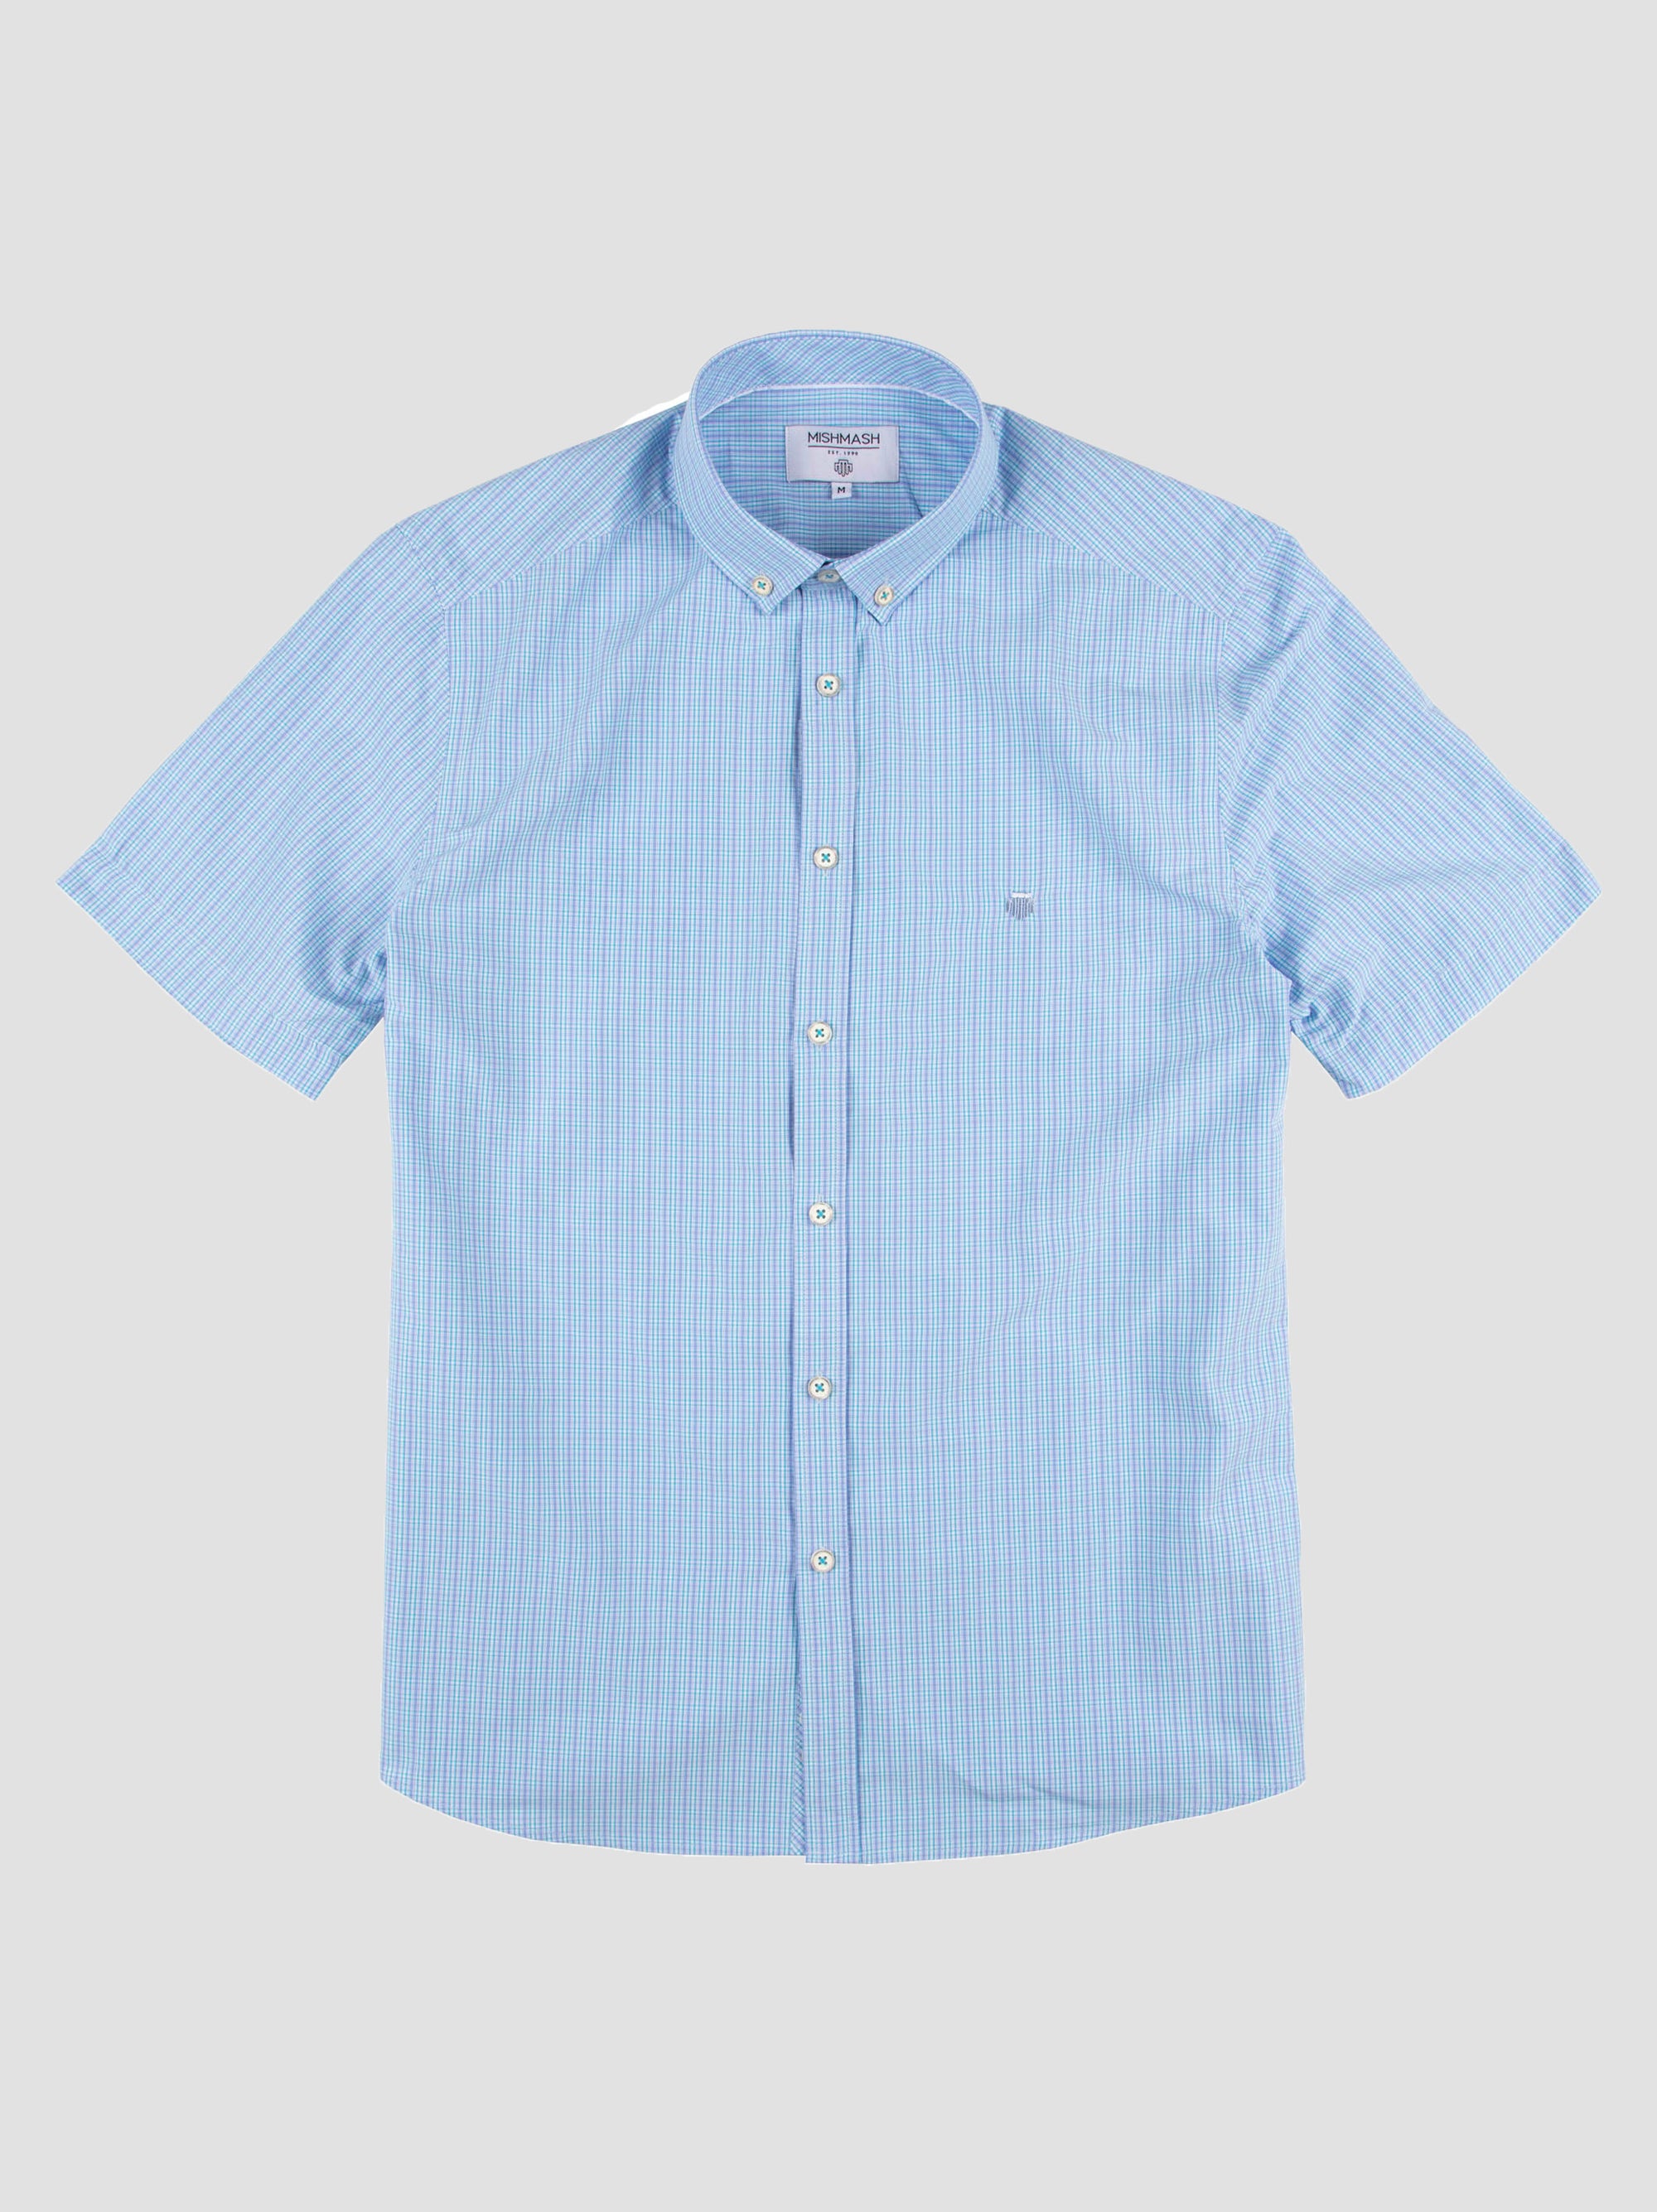 deck-sky-blue-mens-check-cotton-short-sleeve-shirt-mish-mash